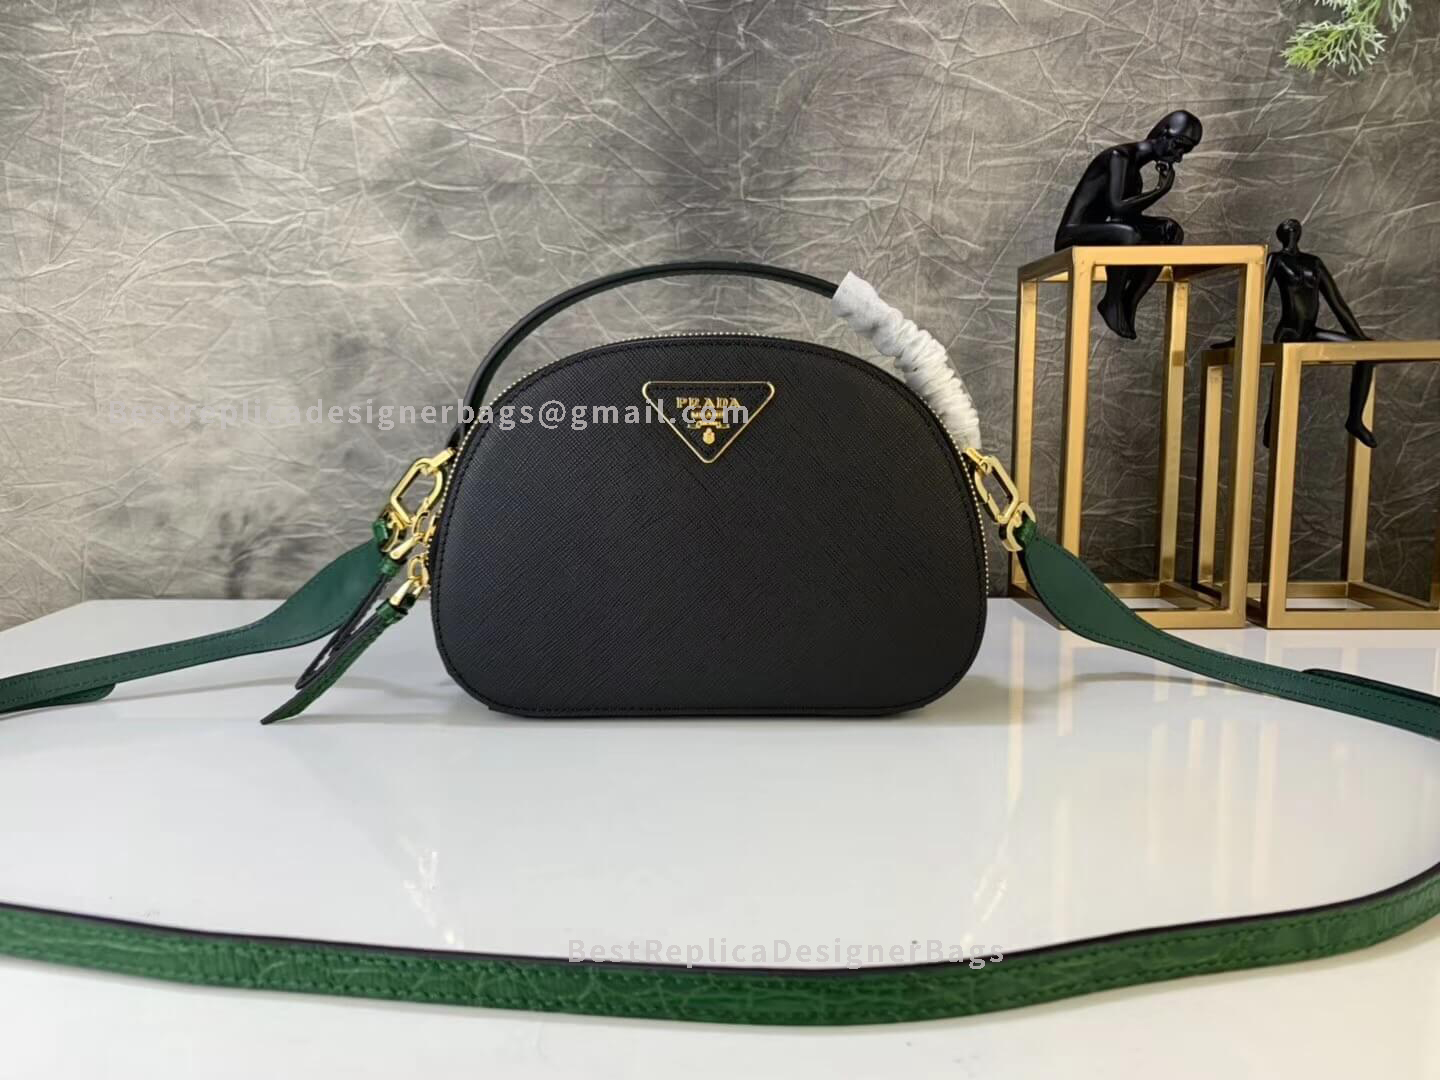 Prada Black And Green Odette Saffiano Leather Bag With Crocodile Effect Strap 123